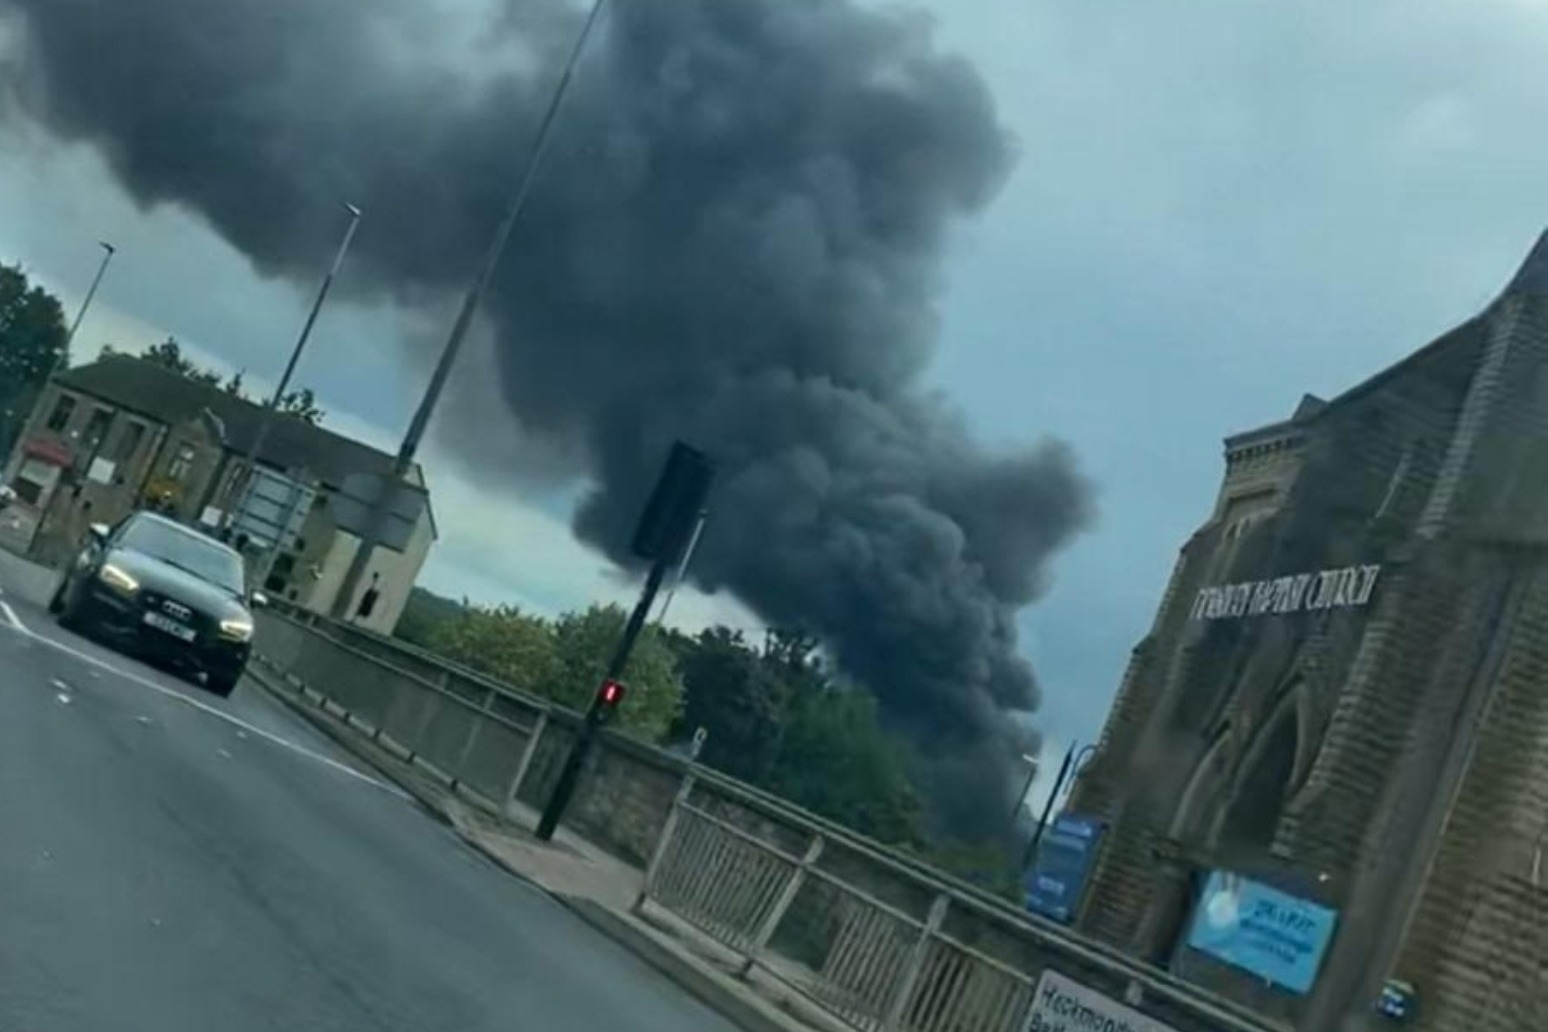 Fire tackled at industrial estate after ‘massive explosion’ 